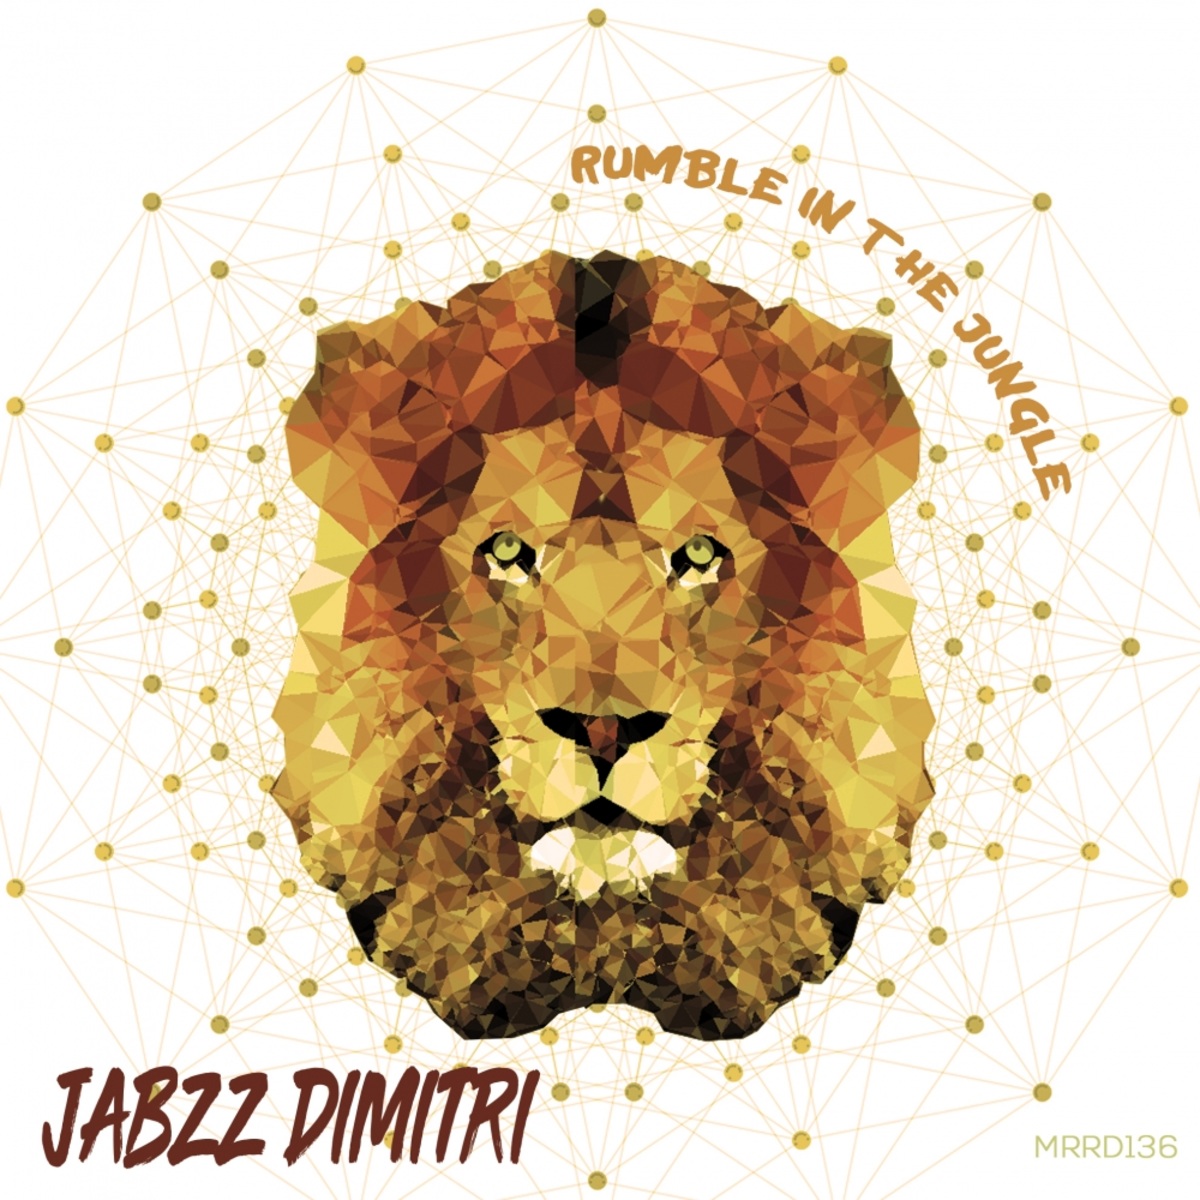 Jabzz Dimitri - Rumble In The Jungle / Multi-Racial Records